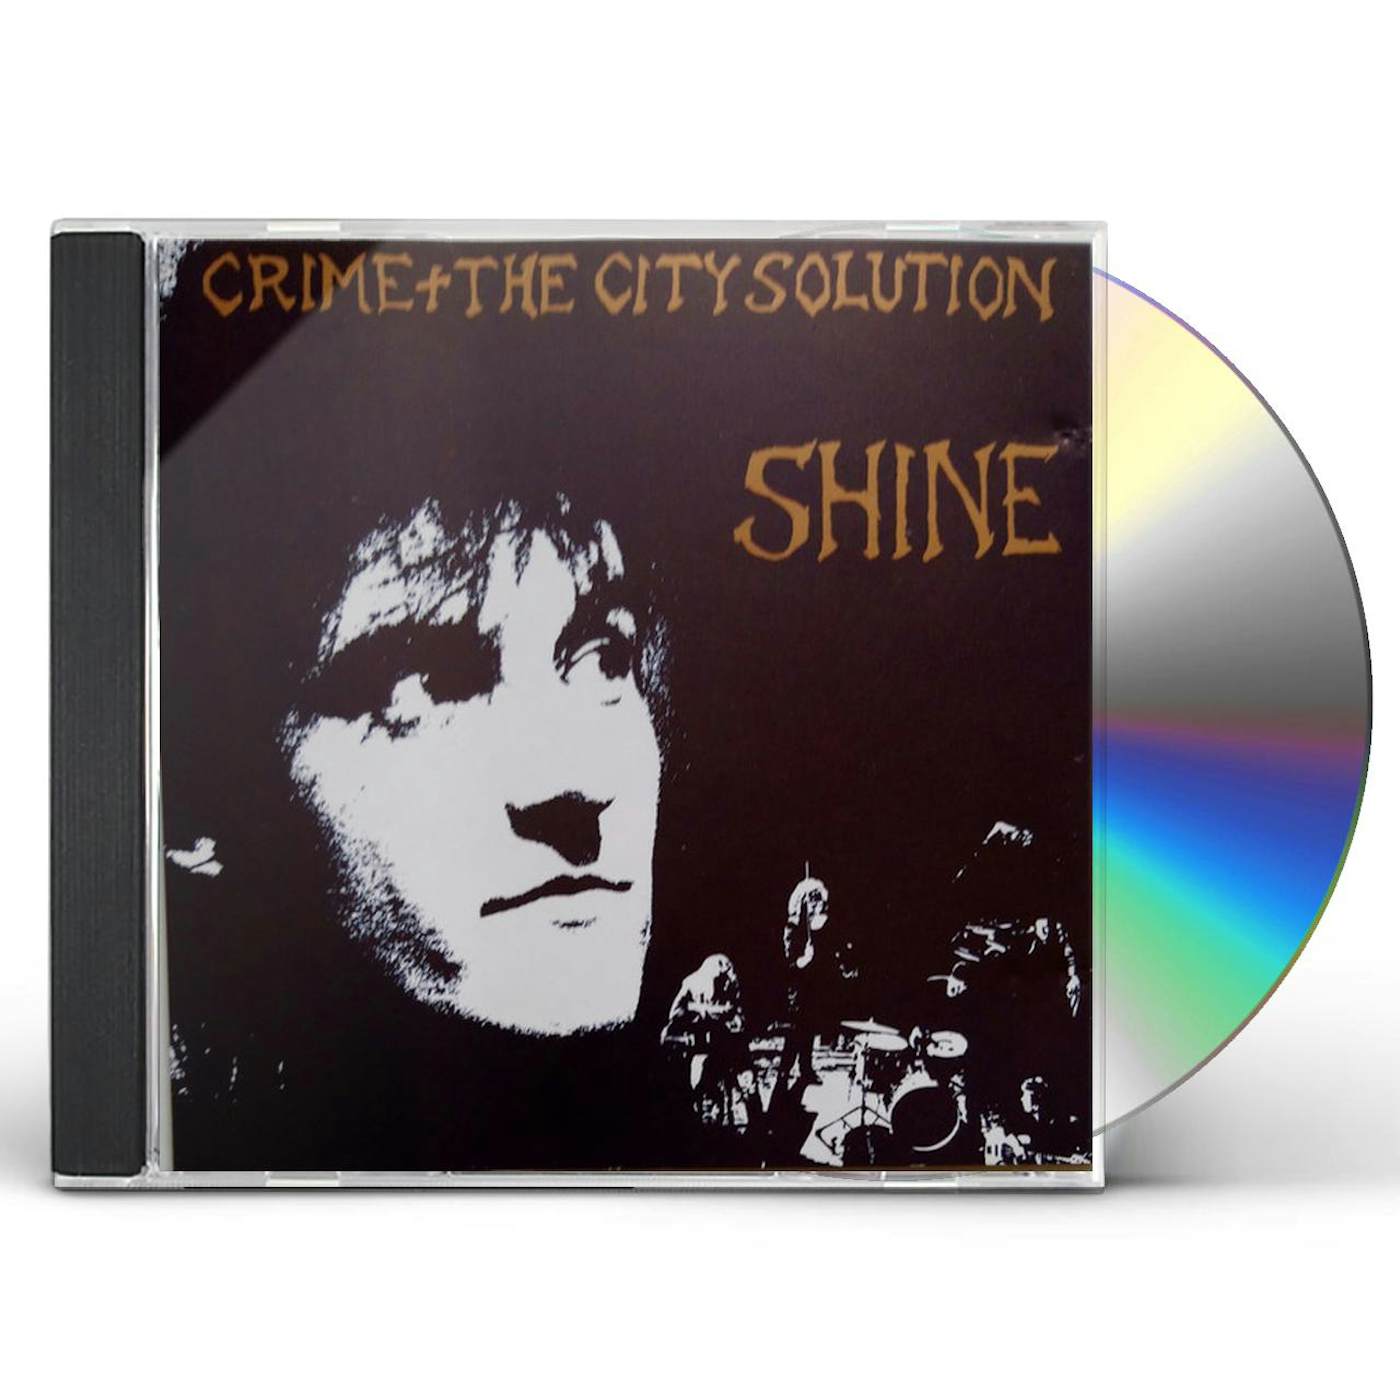 Crime & the City Solution Shine CD